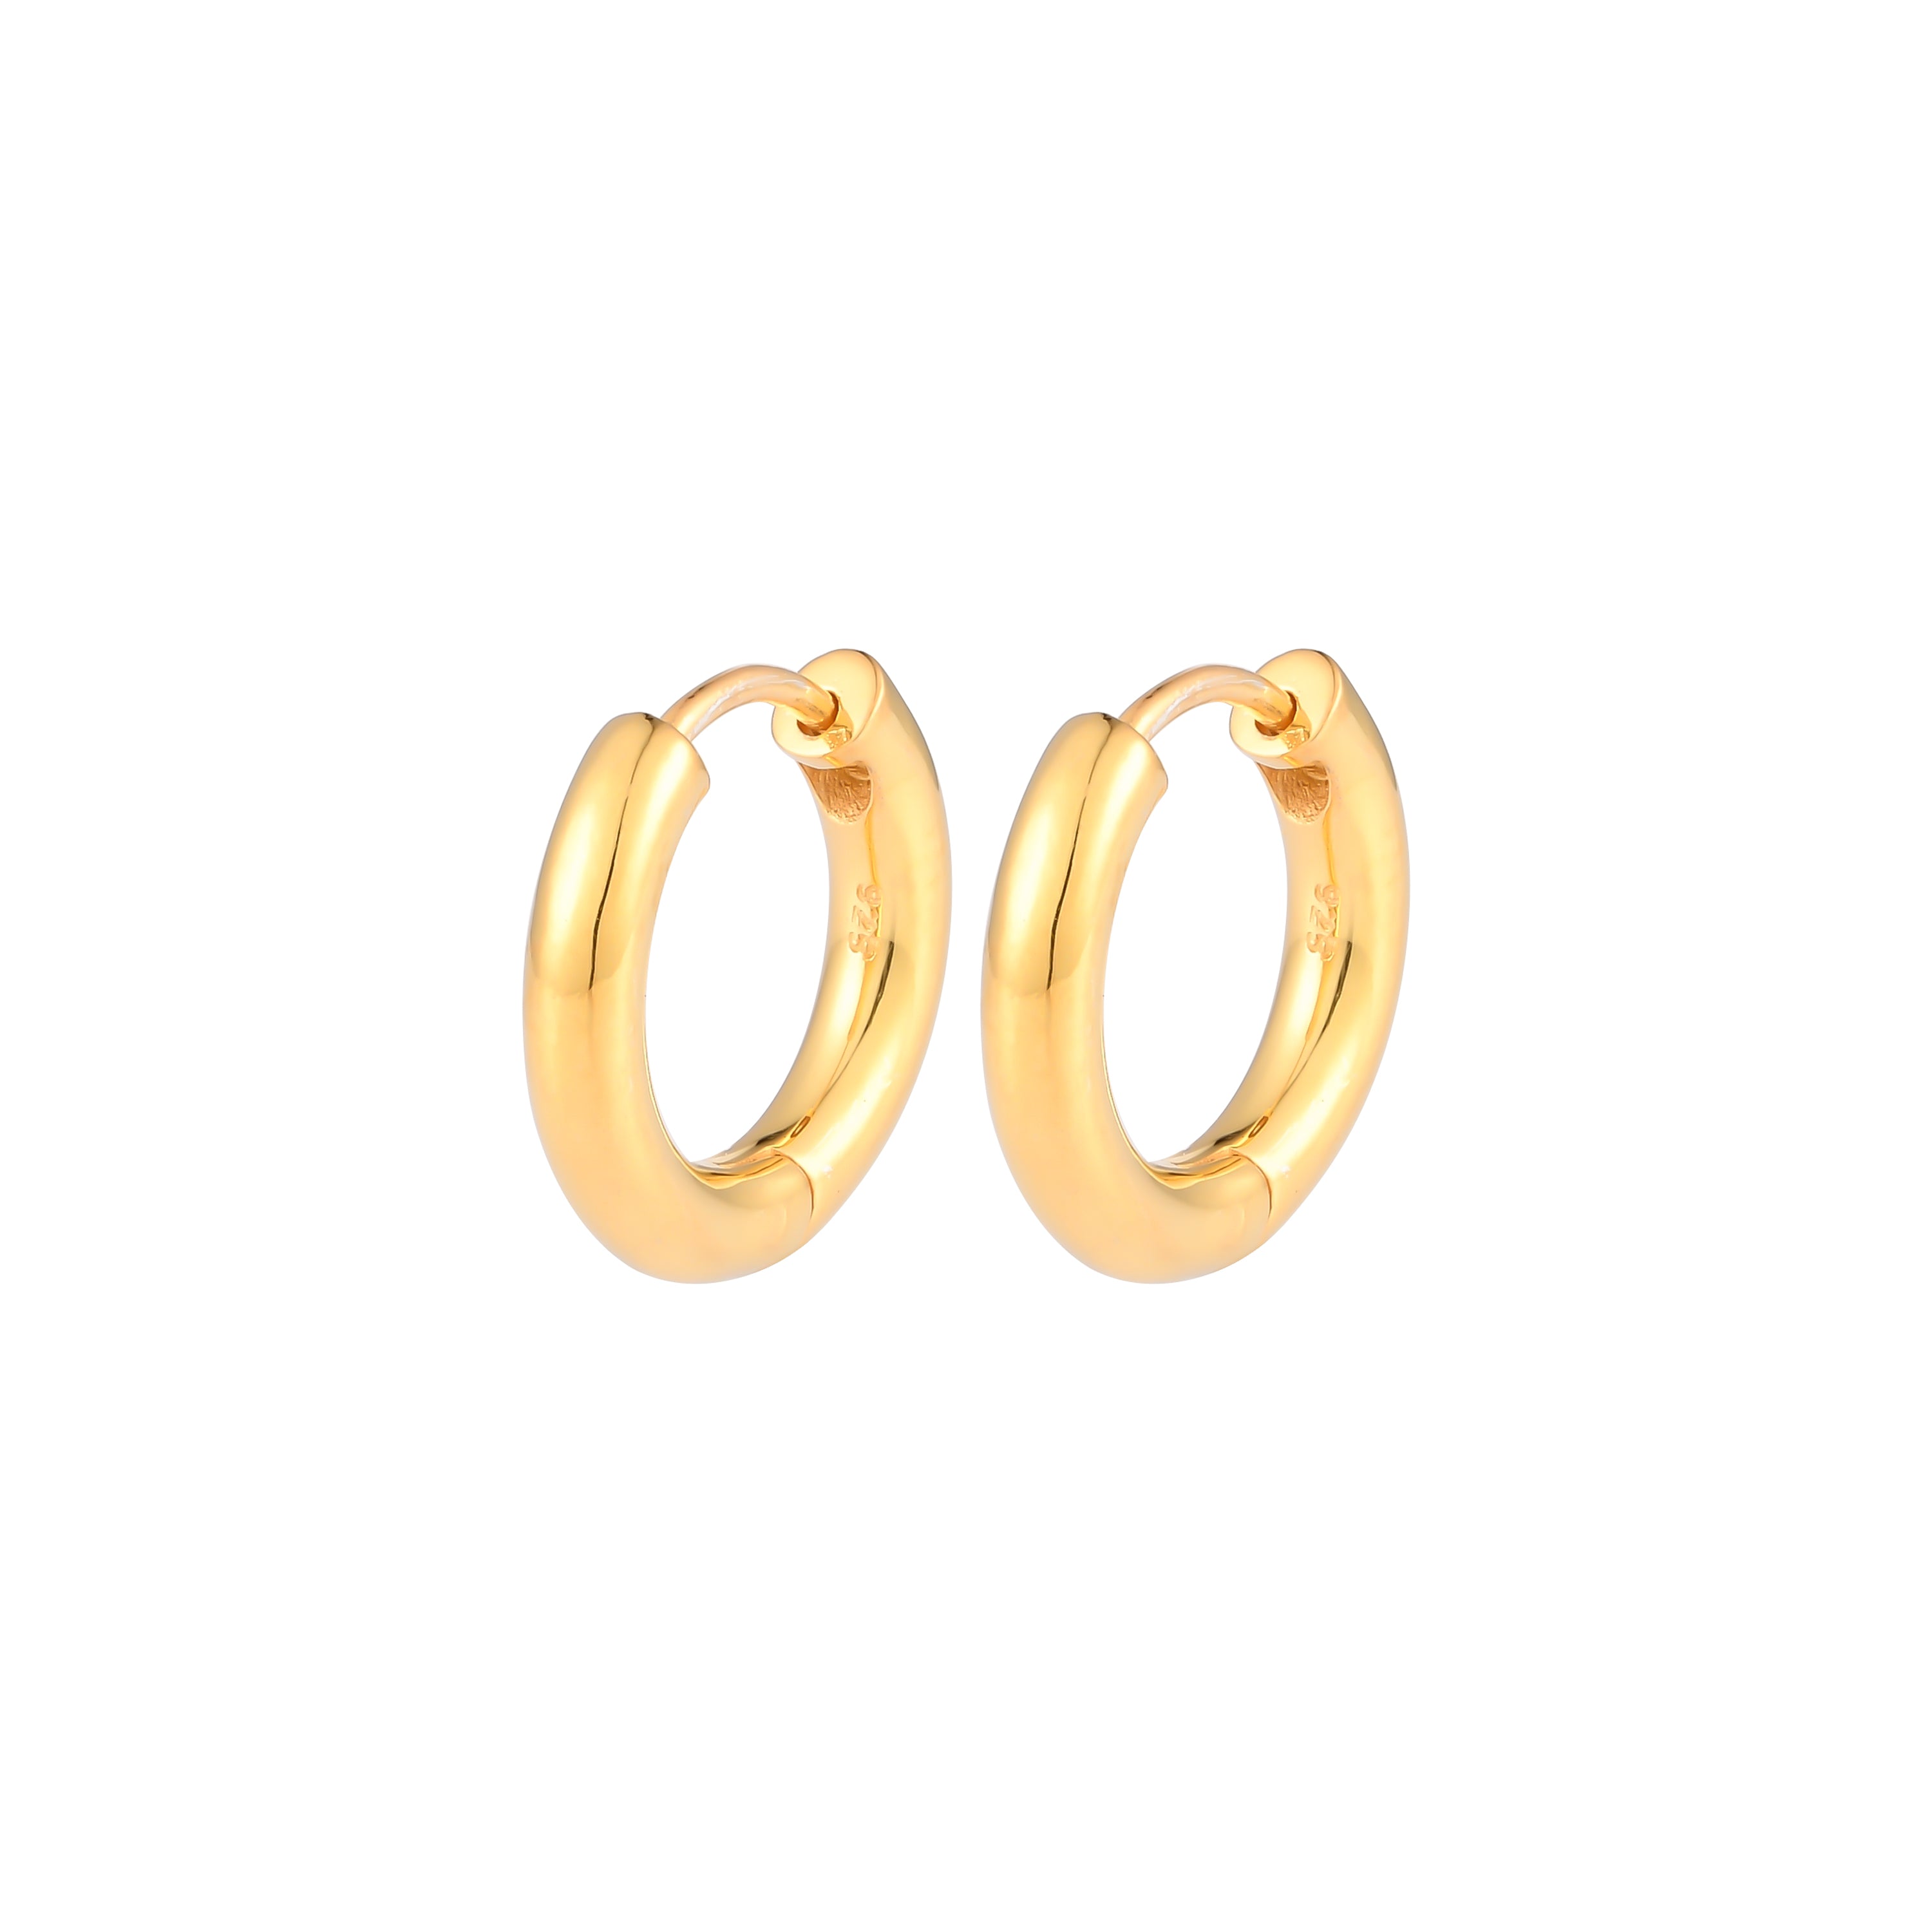 60 Pcs 6mm Bali Twisted Closed Jump Ring 18k Gold Plated Jewelry Making  vb-105 | eBay